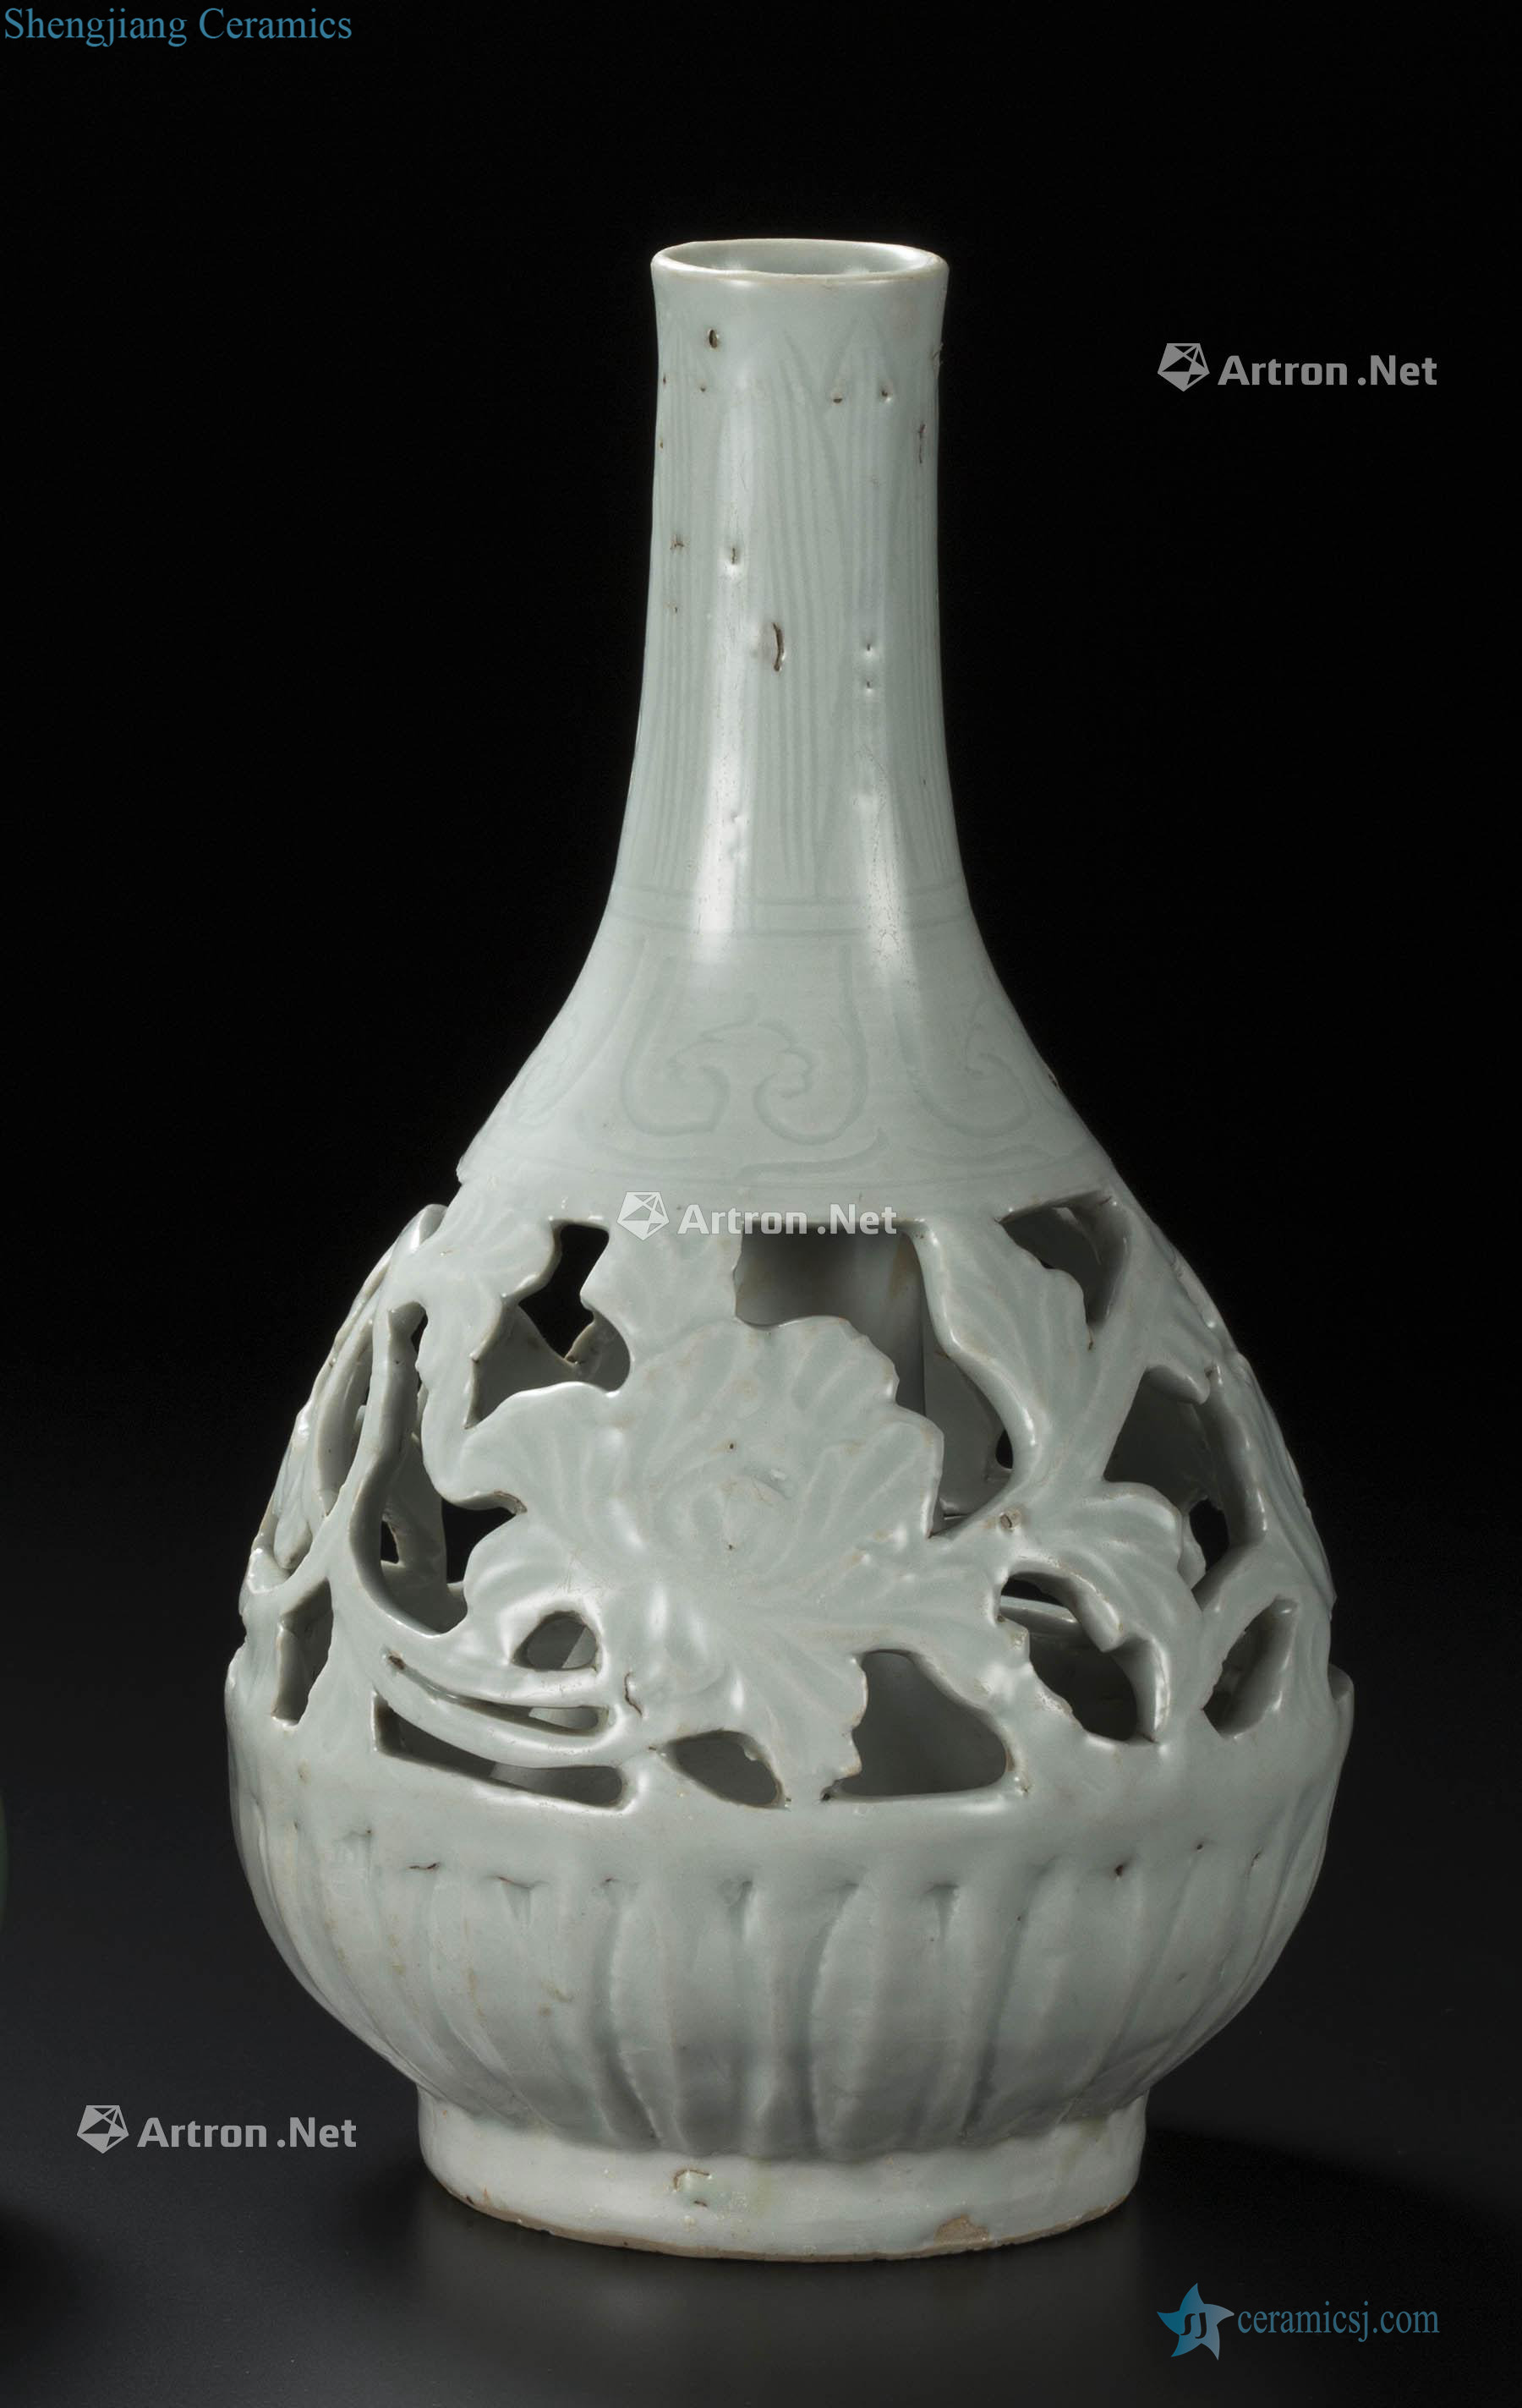 The yuan dynasty jingdezhen kiln egg white glazed hollow out the flower pattern set of bottle